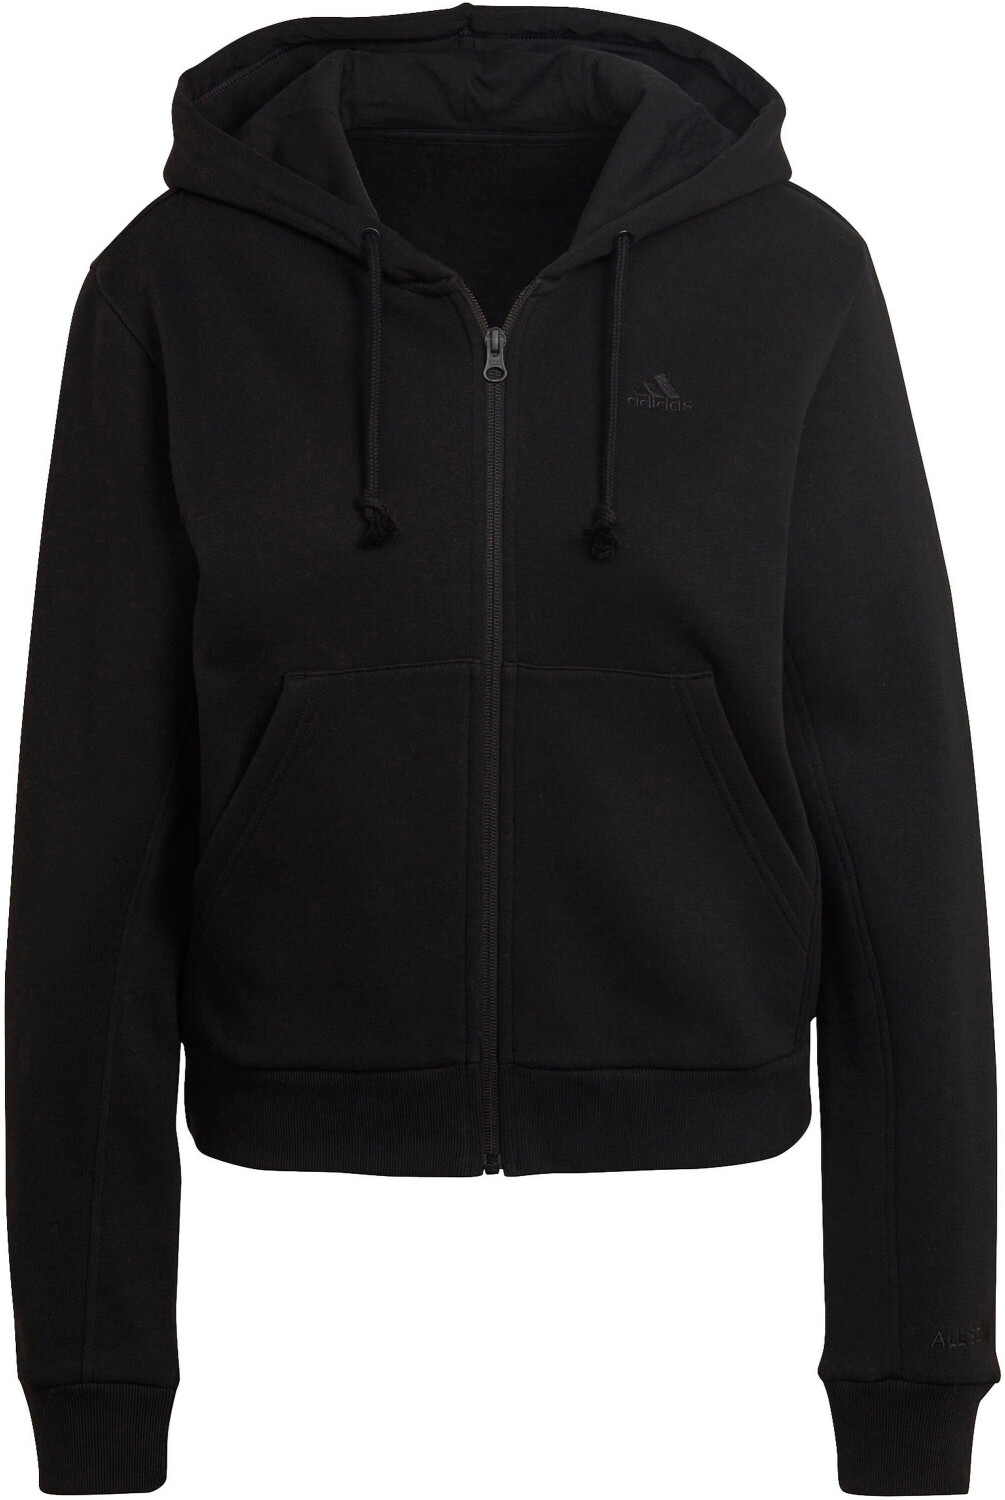 Adidas All Szn Sweatjacket black (HC8848) ab 34,95 € | Preisvergleich bei